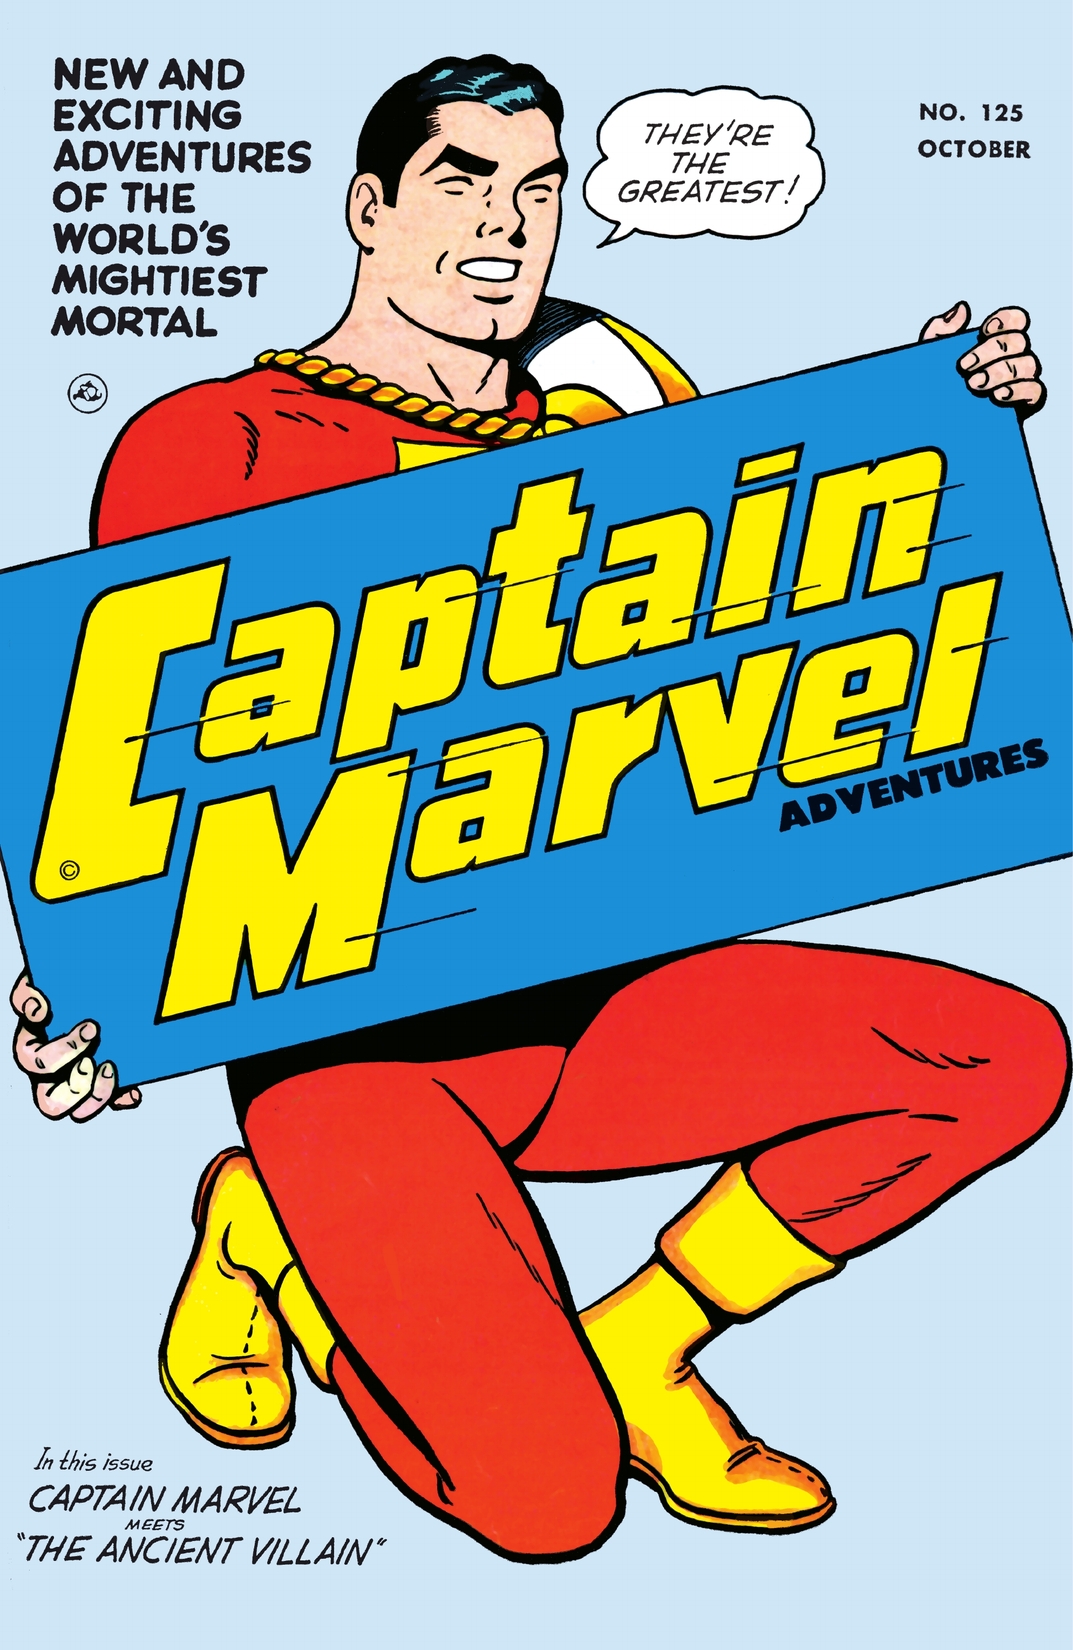 Captain Marvel Adventures #125 preview images